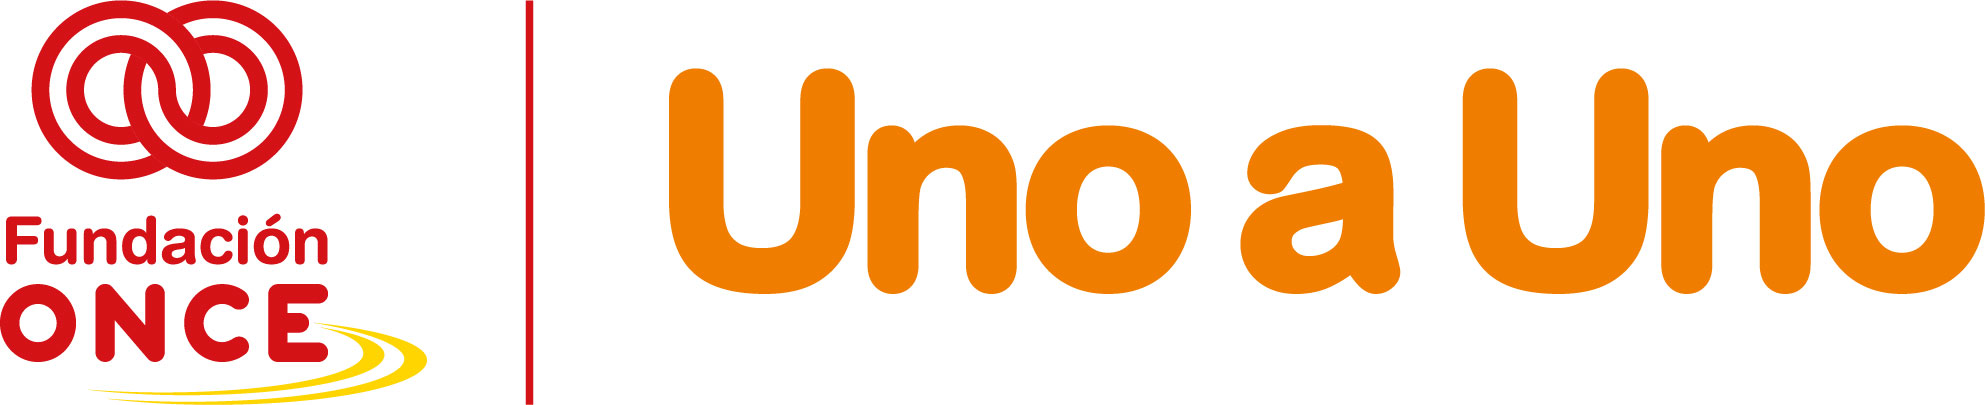 01. Logo F.ONCE unoauno